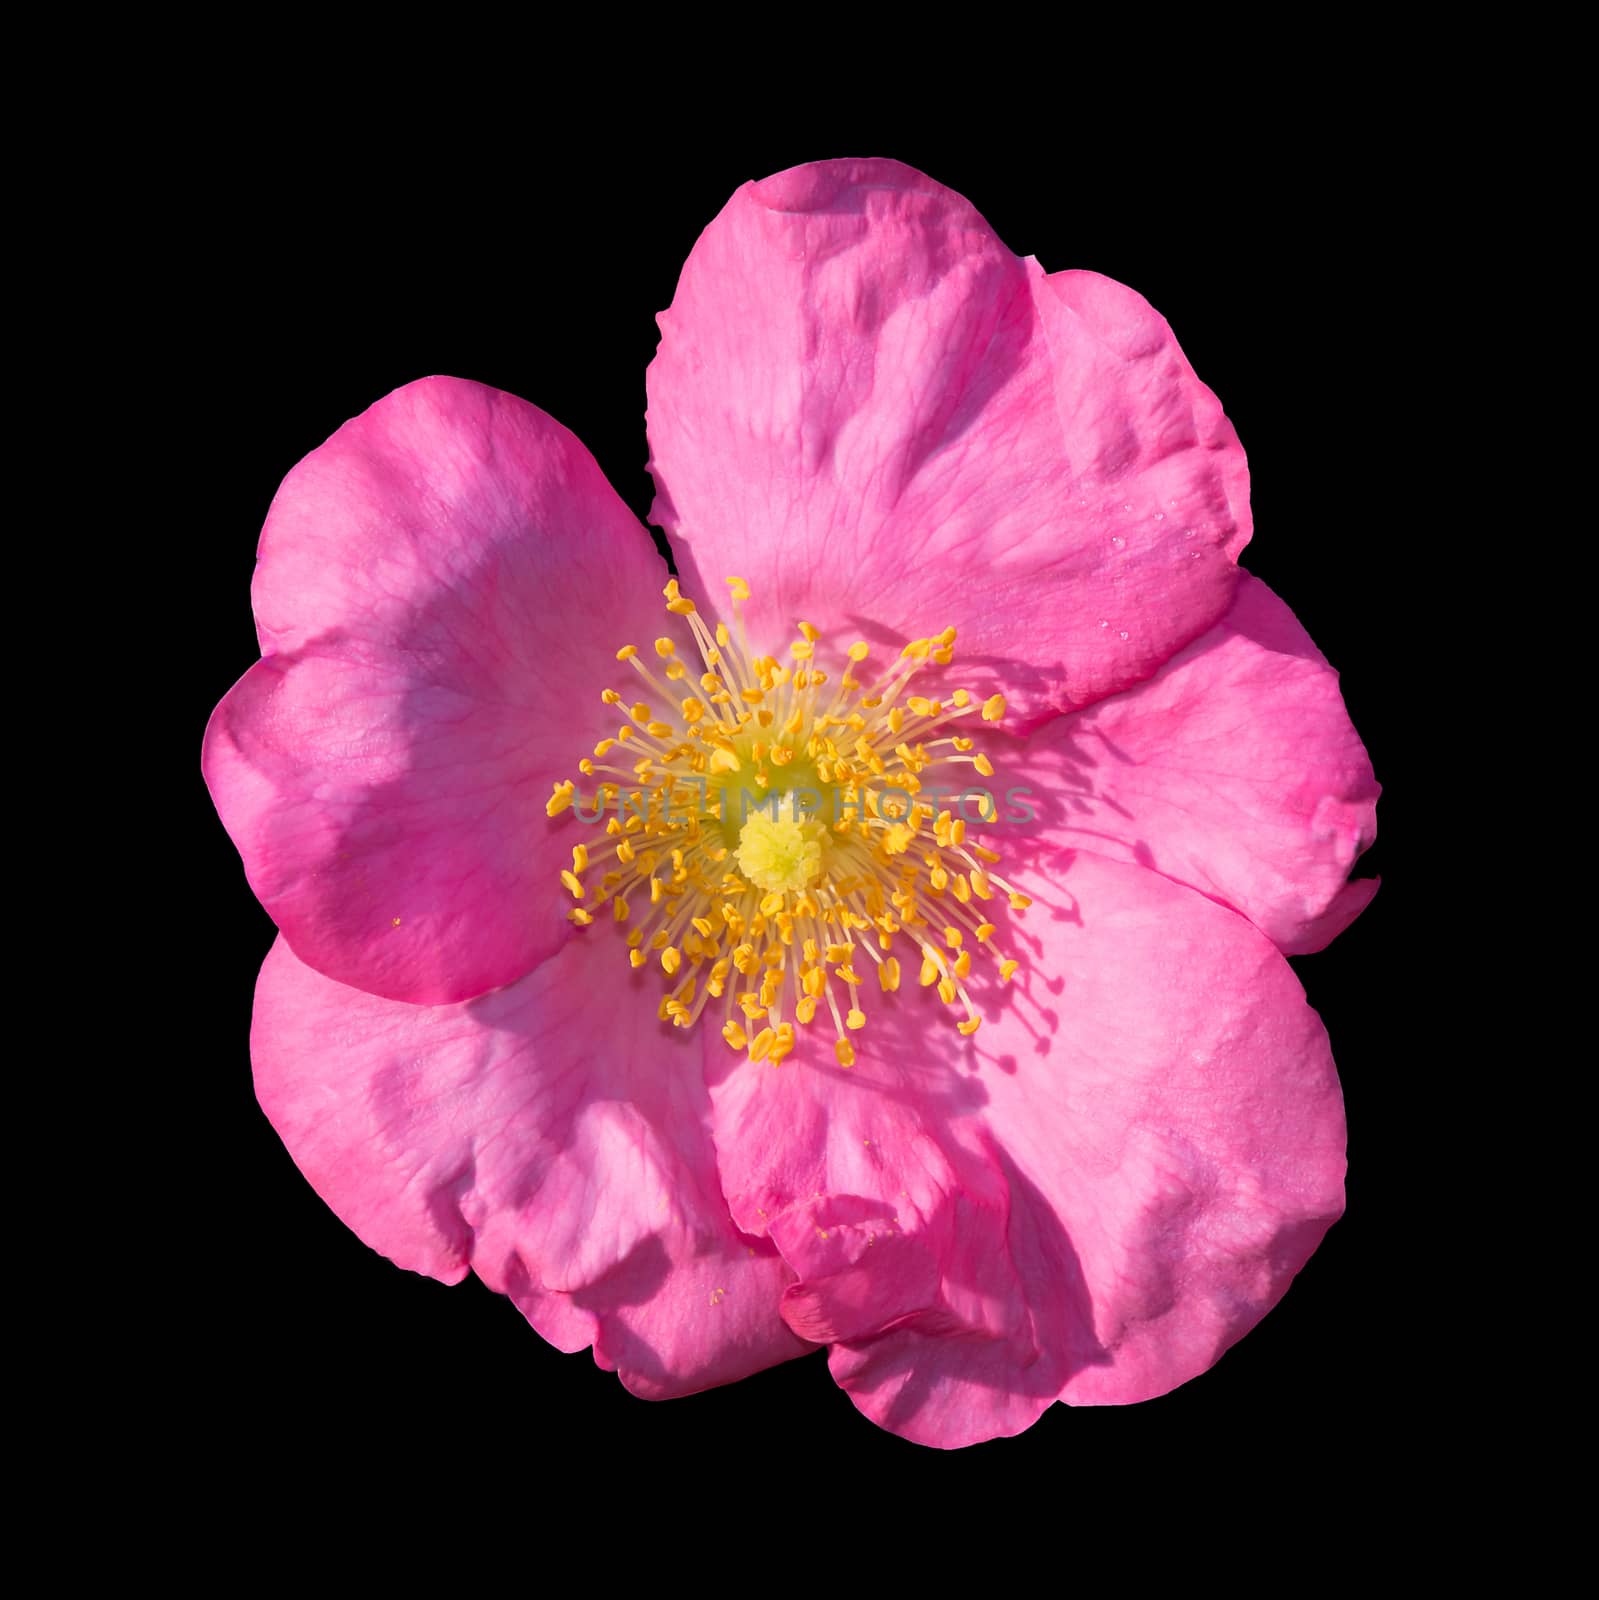 Wild rose. Pink Rosa rugosa or Dog rose closeup  in September garden.